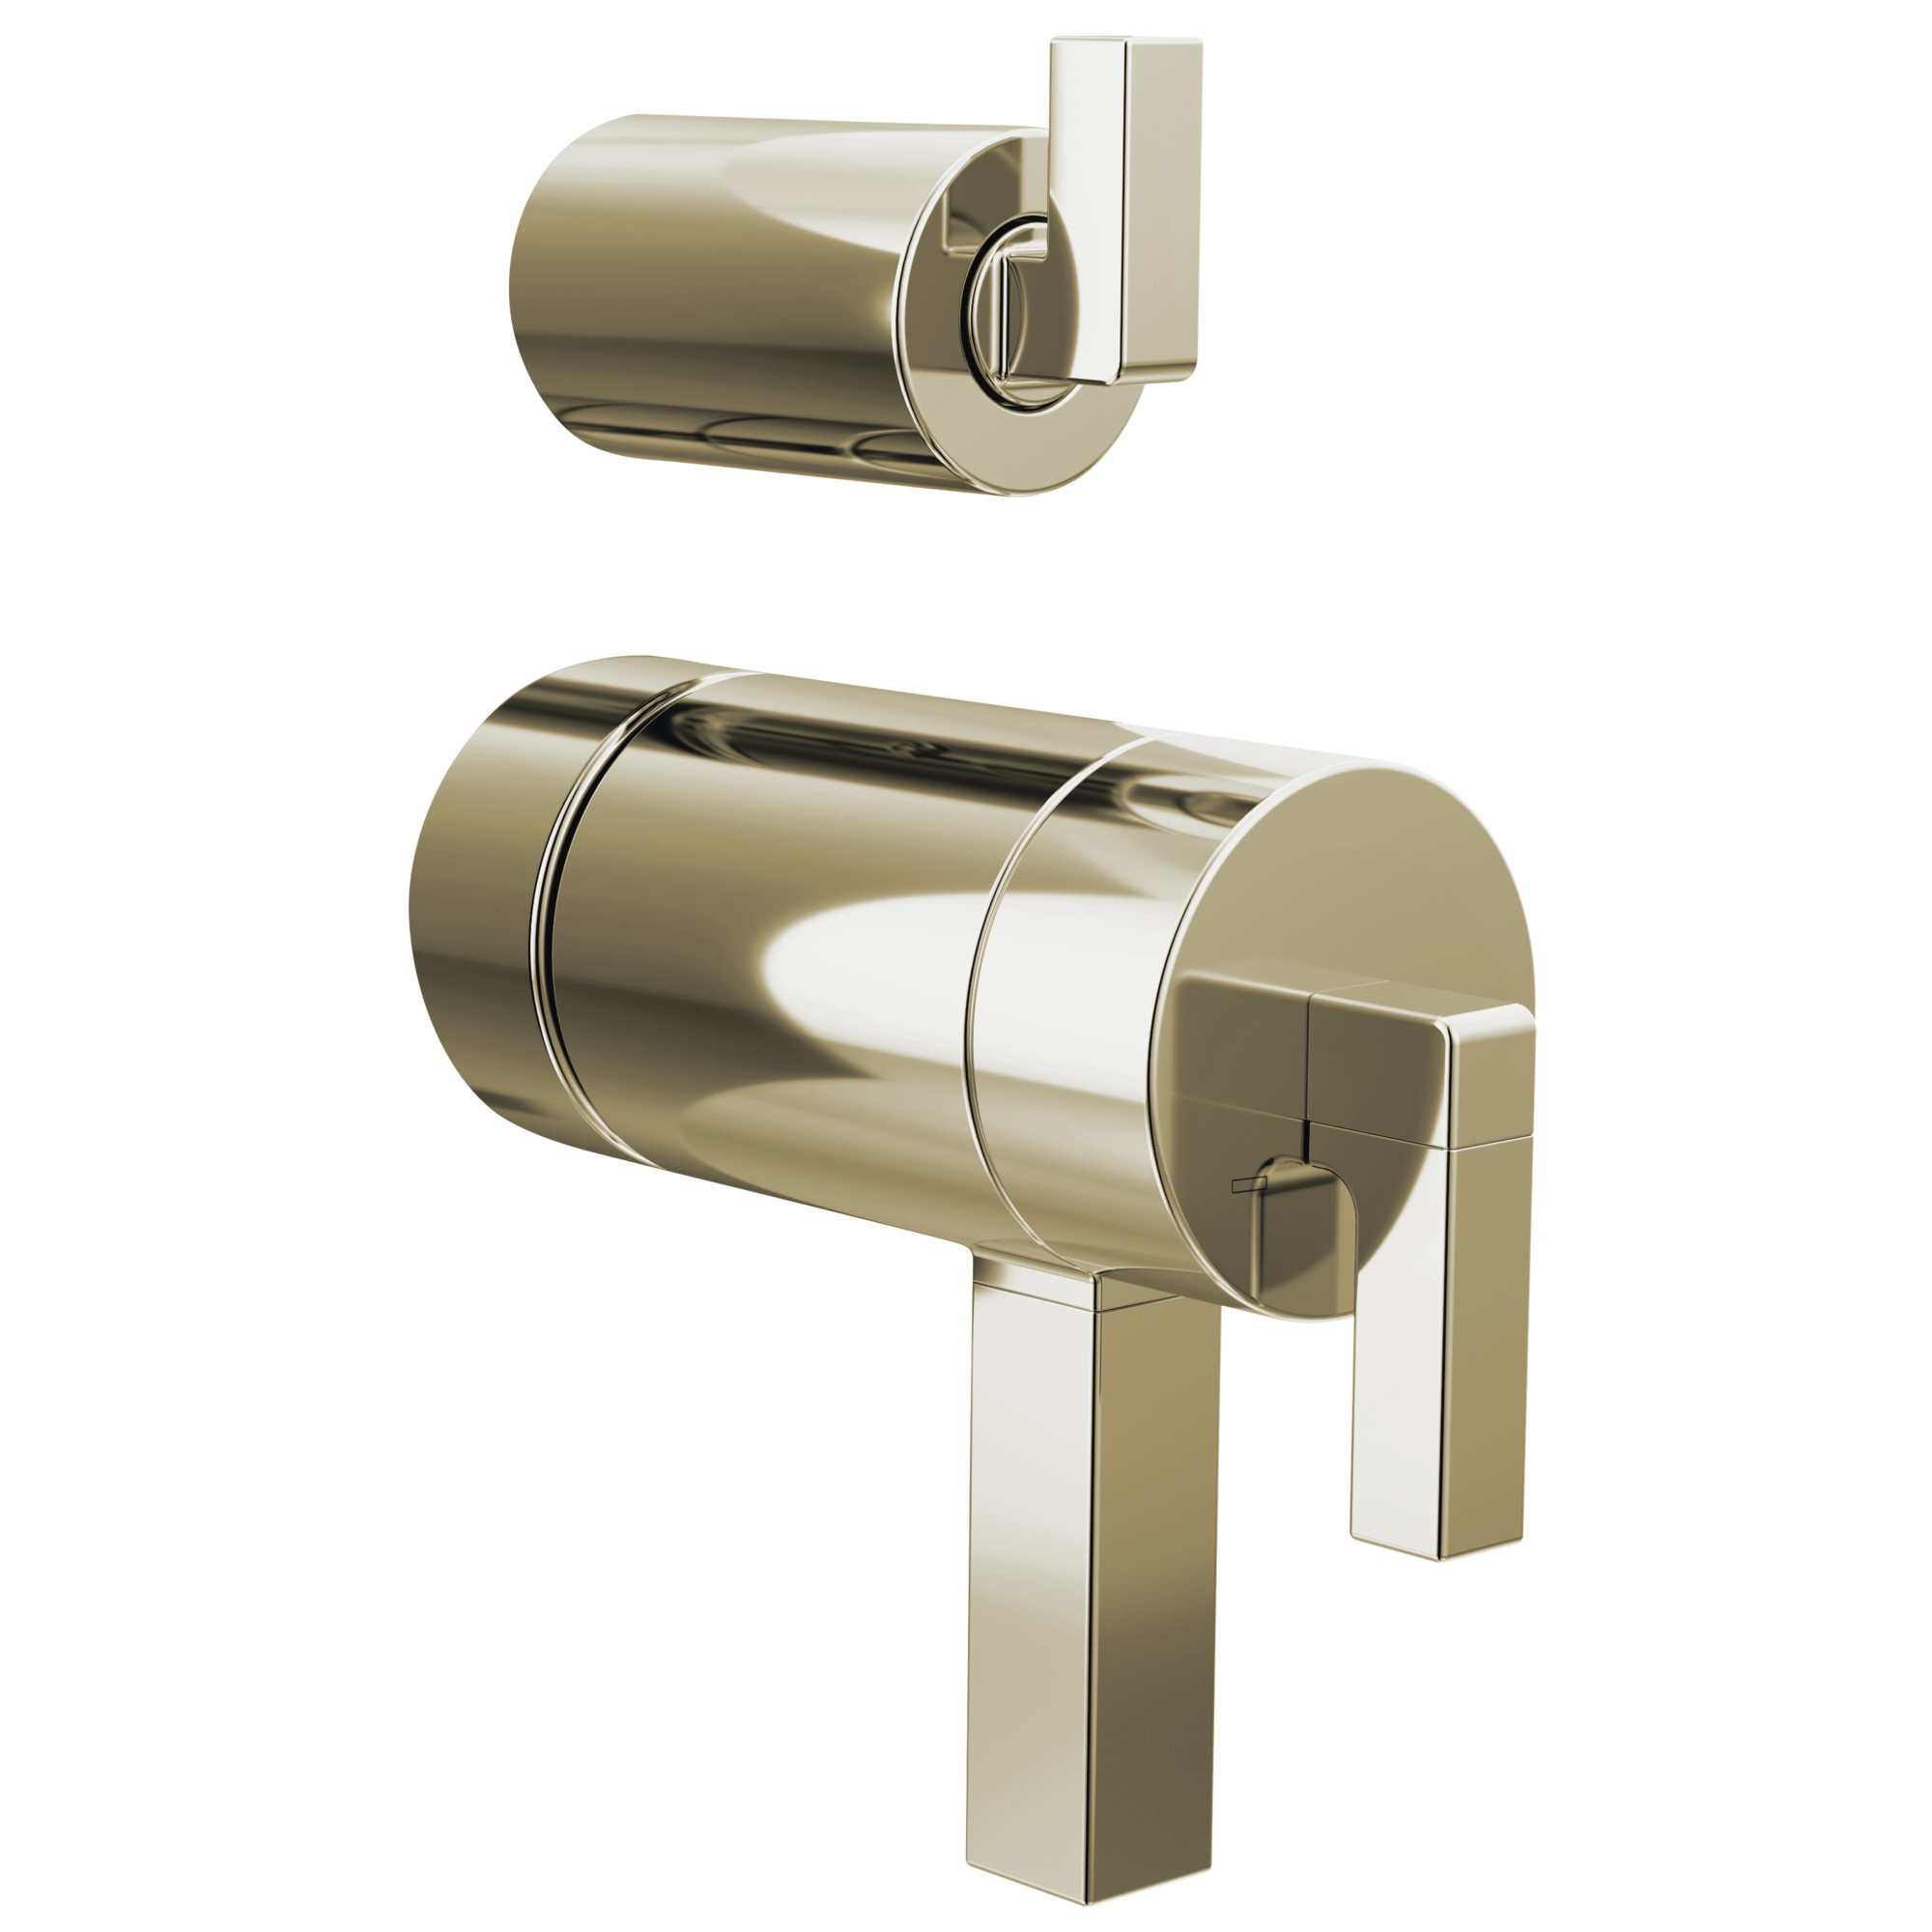 Brizo Frank Lloyd Wright TempAssure Thermostatic Valve with Integrated Diverter Trim Lever Handle Kit